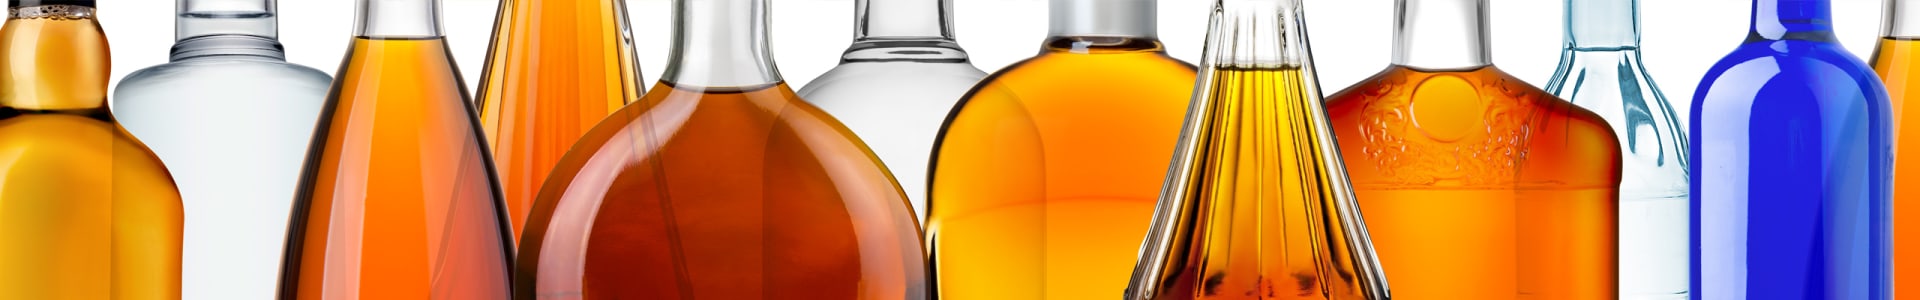 Matusalem Gran Reserva 18 Rum | Solera Blended NV / 750 ml.